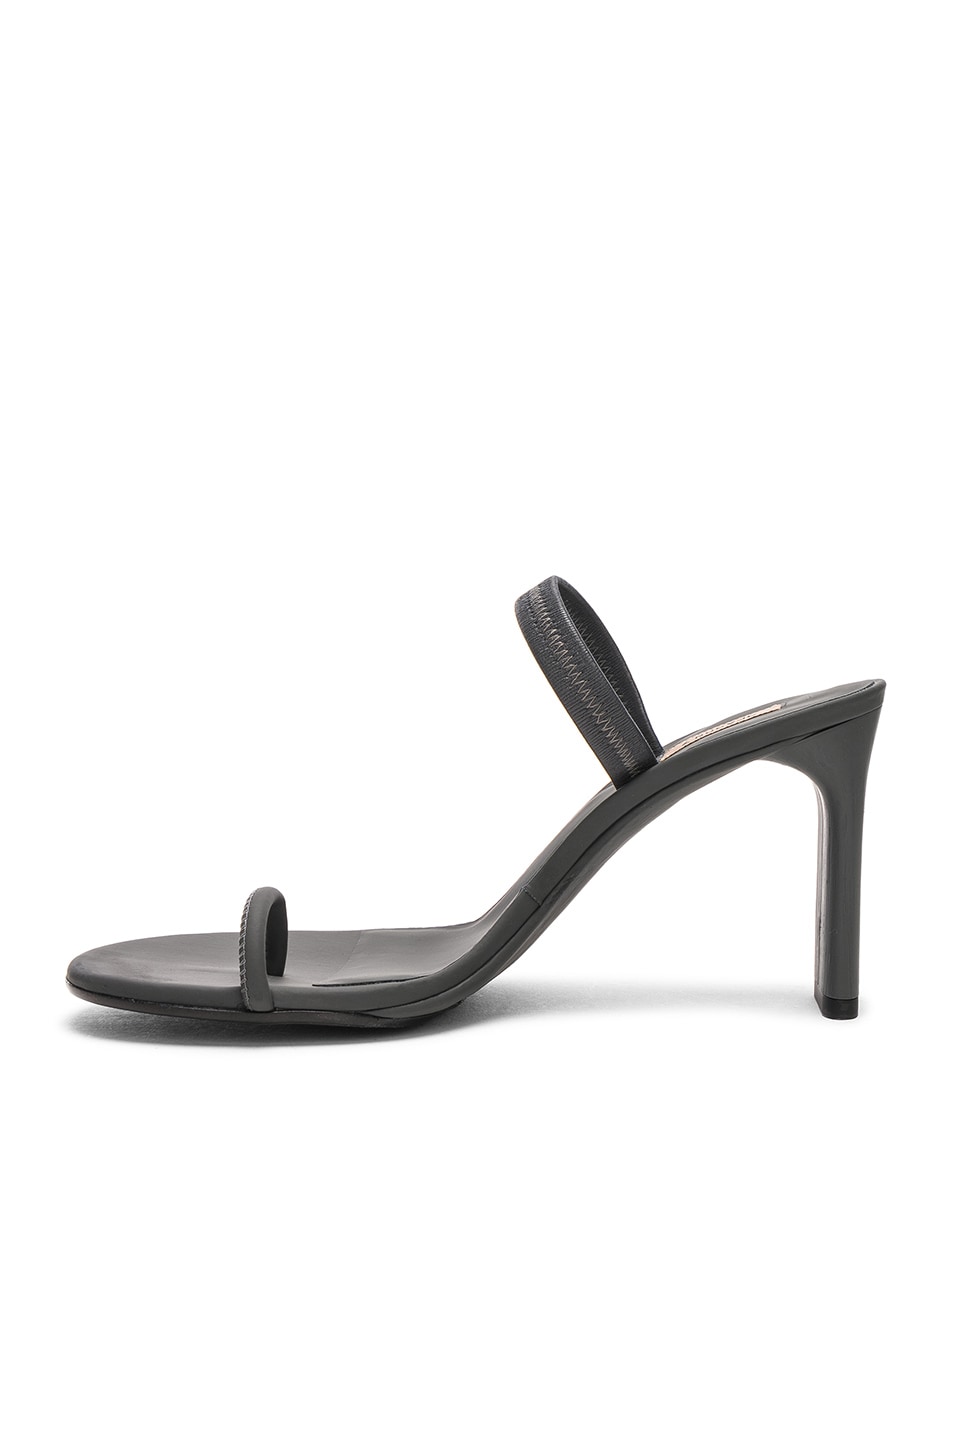 YEEZY Season 7 Rubberized Leather Minimal Sandals in Graphite | FWRD